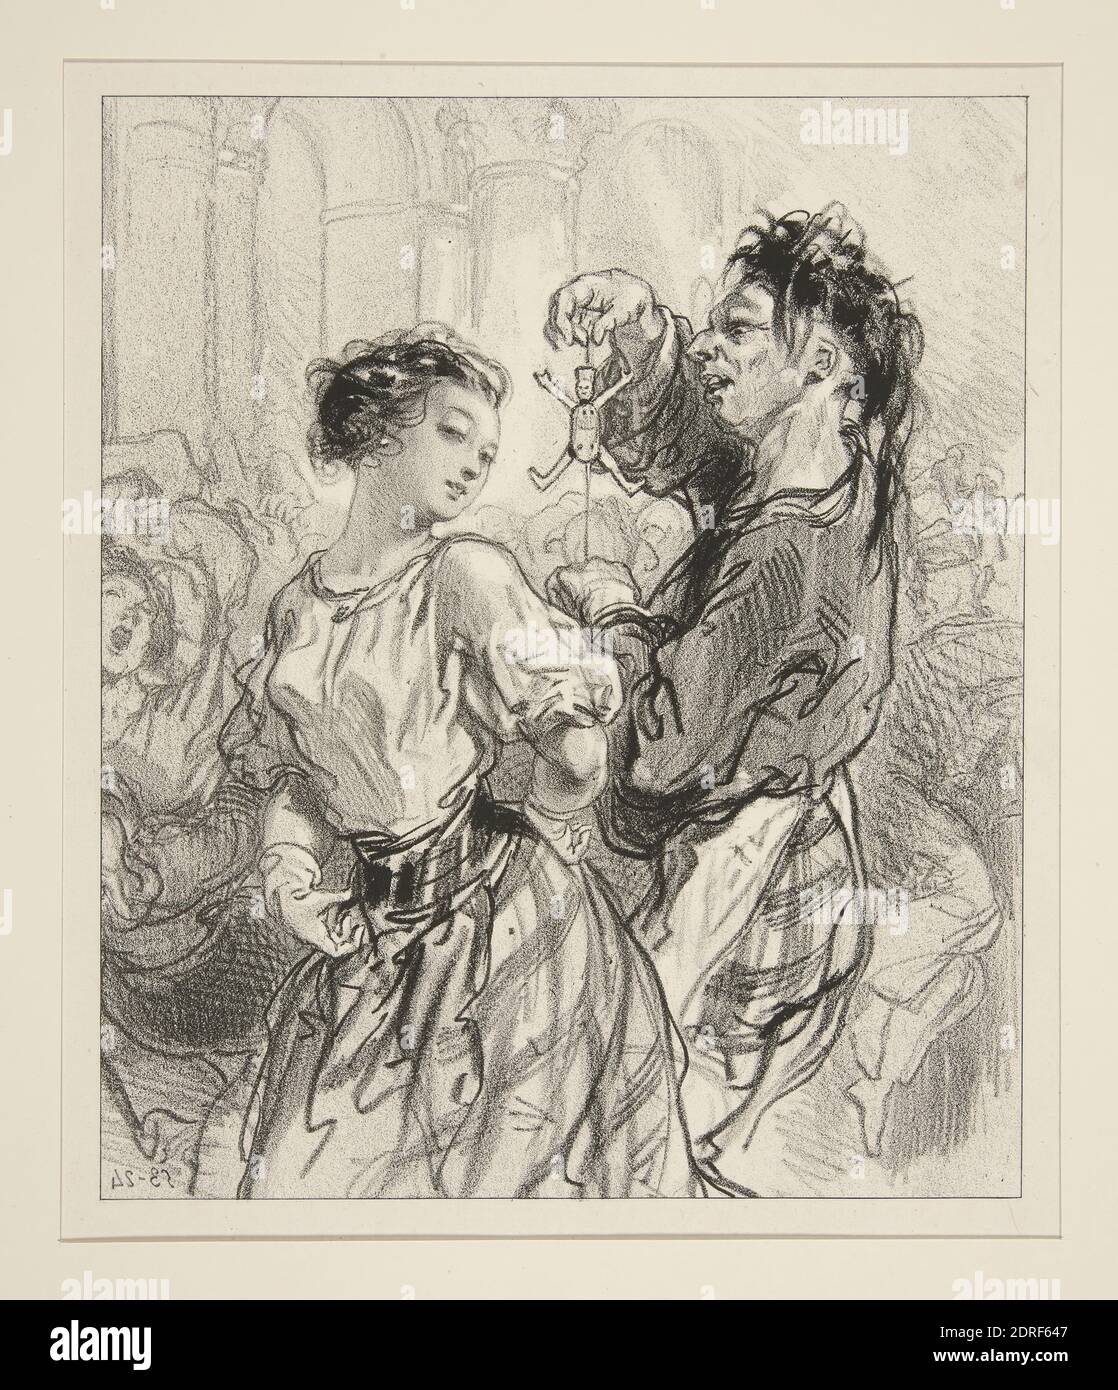 Artista: Paul Gavarni, Francese, 1804–1866, Mademoiselle! v’la ce que c’est qu’un homme! - connu!, litografia, francese, 19 ° secolo, opere su carta - stampe Foto Stock